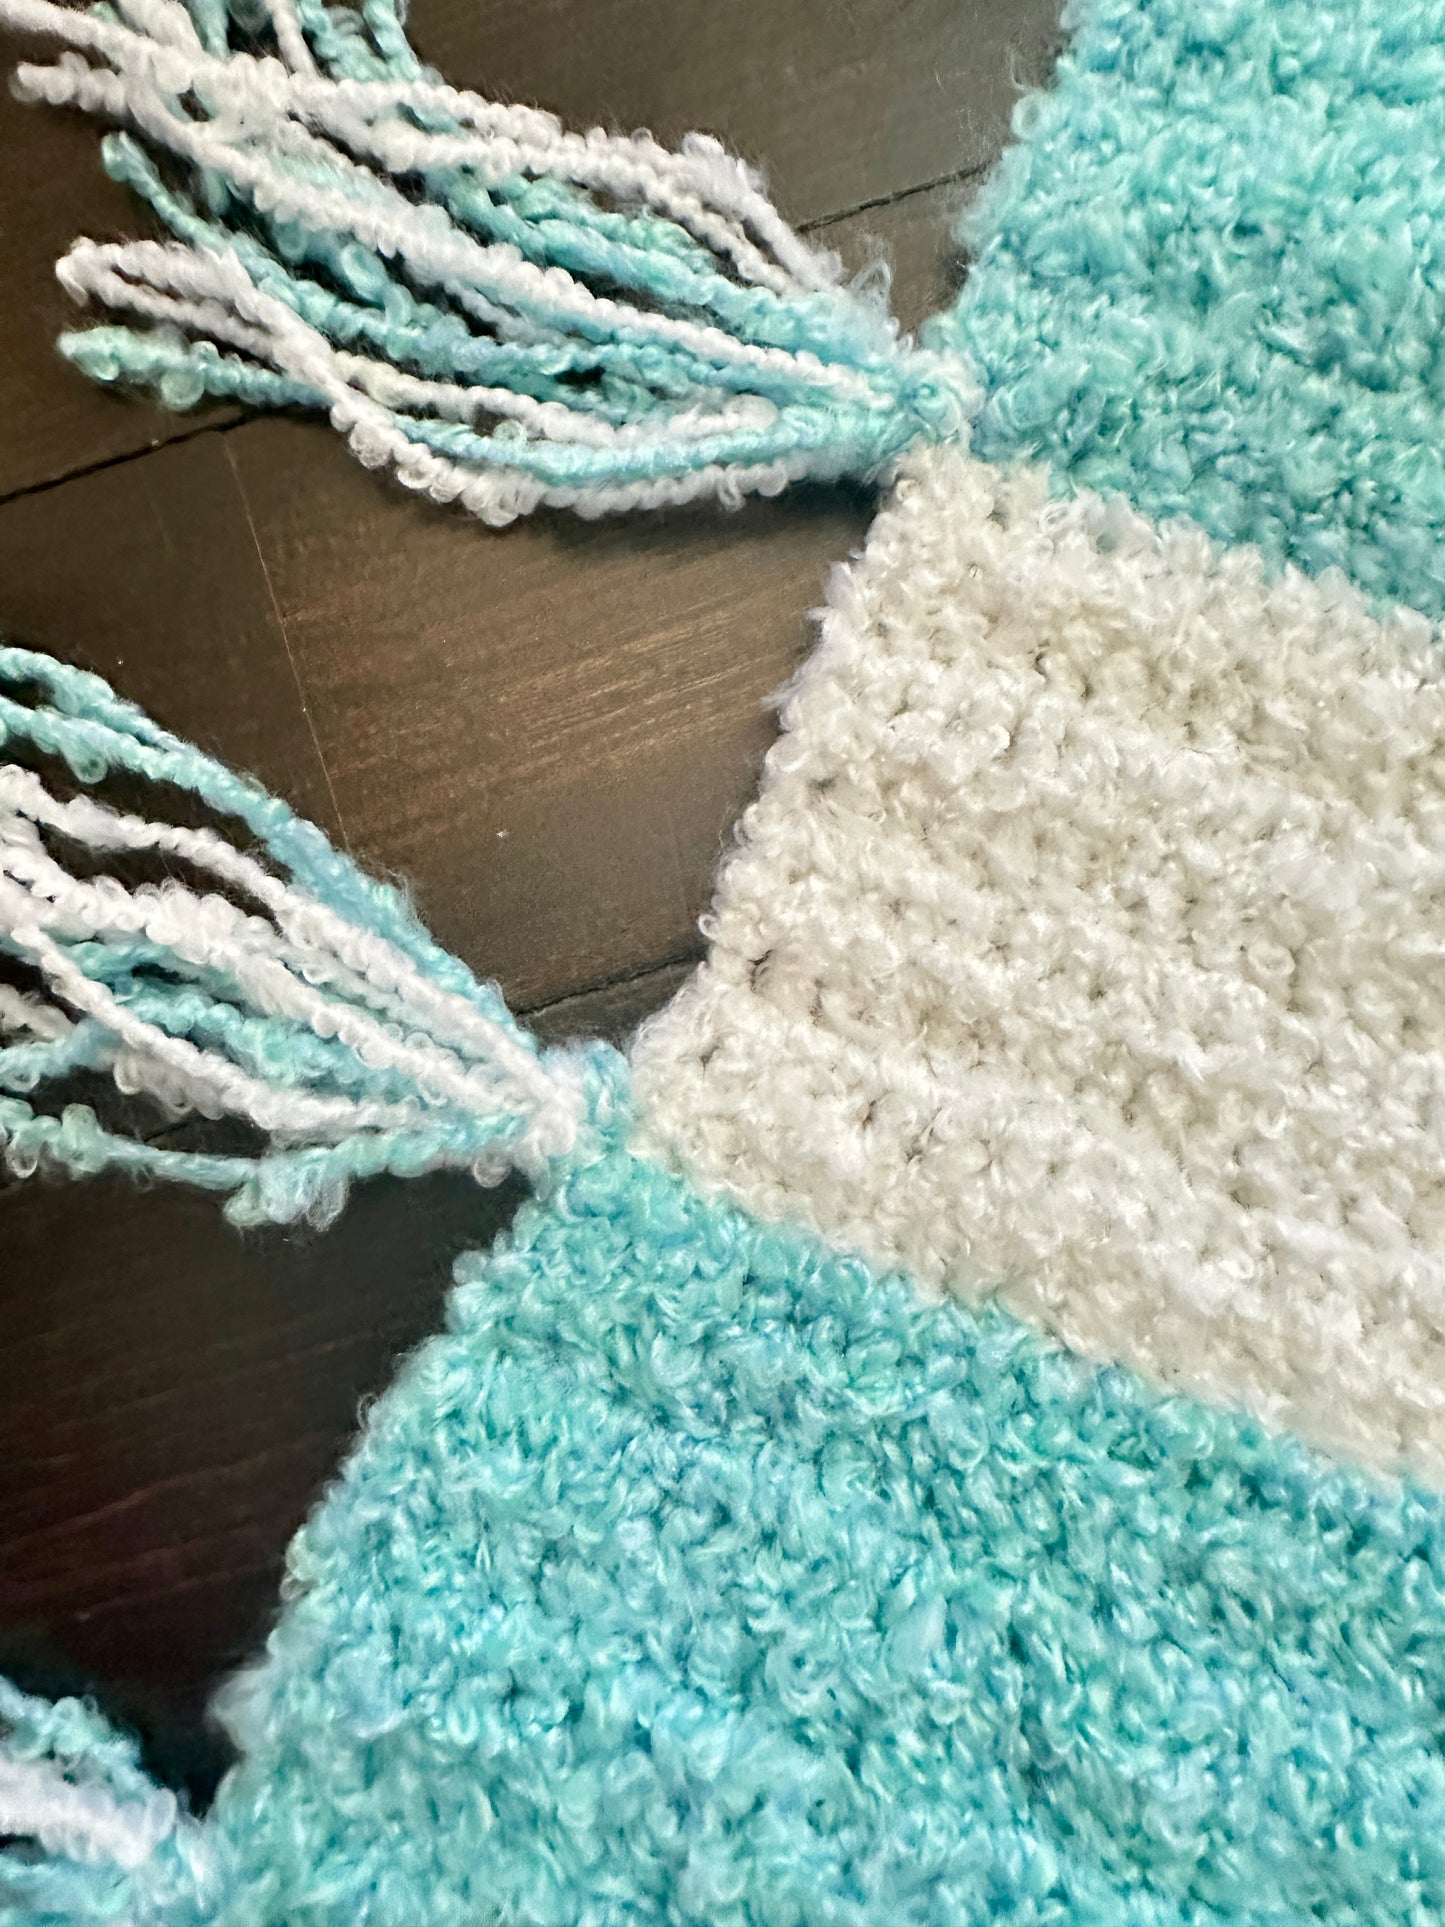 Aqua/White Hand-Crocheted Baby Blanket - 46" x 31" by Nancy Stratman